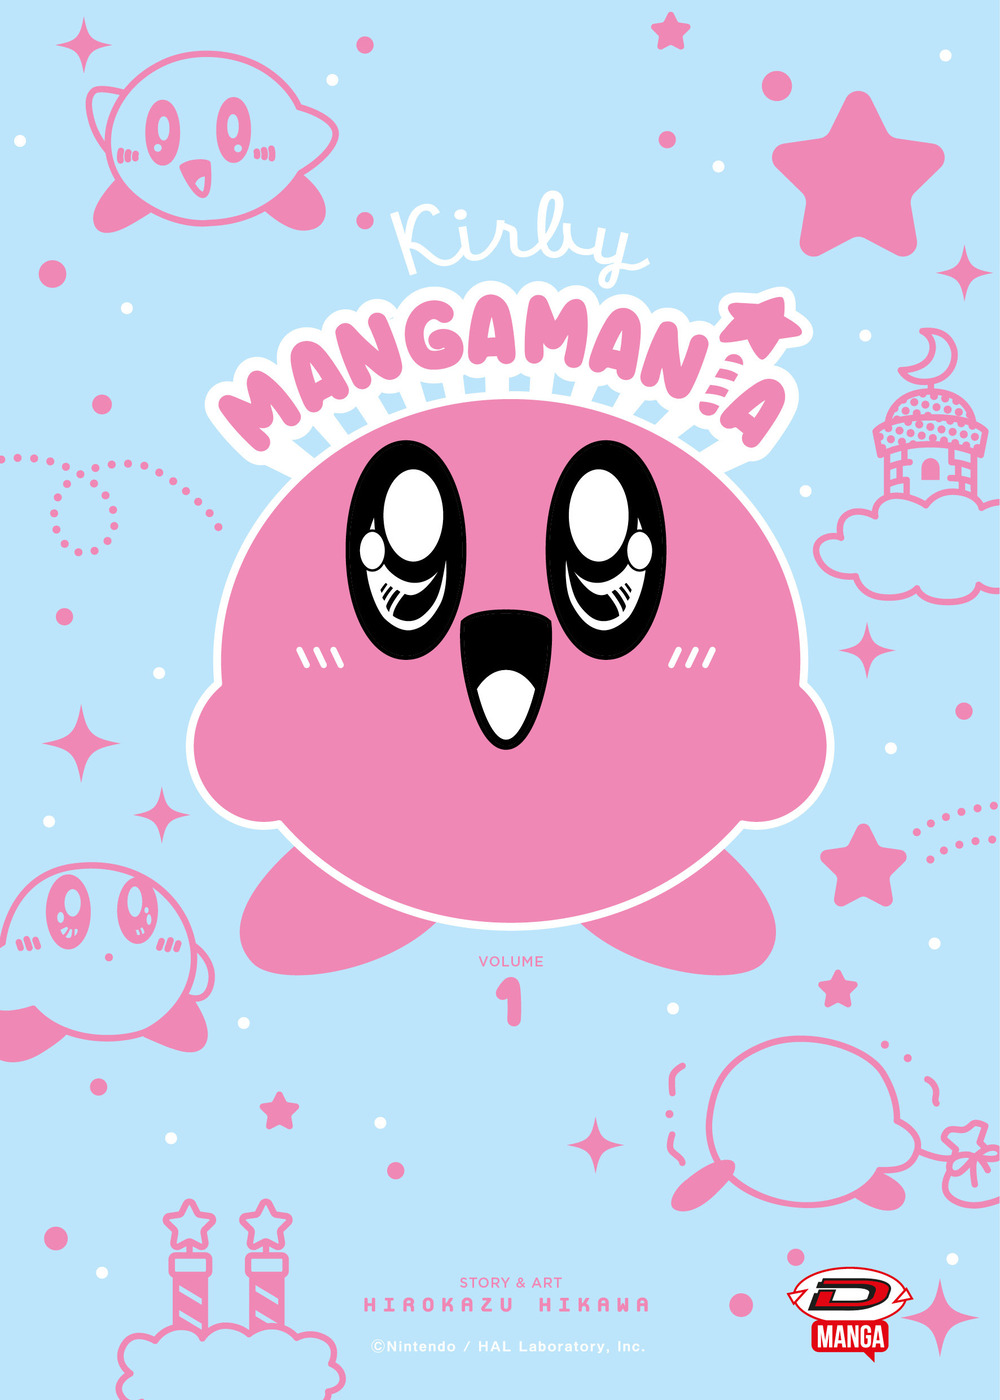 Kirby mangamania. Vol. 1